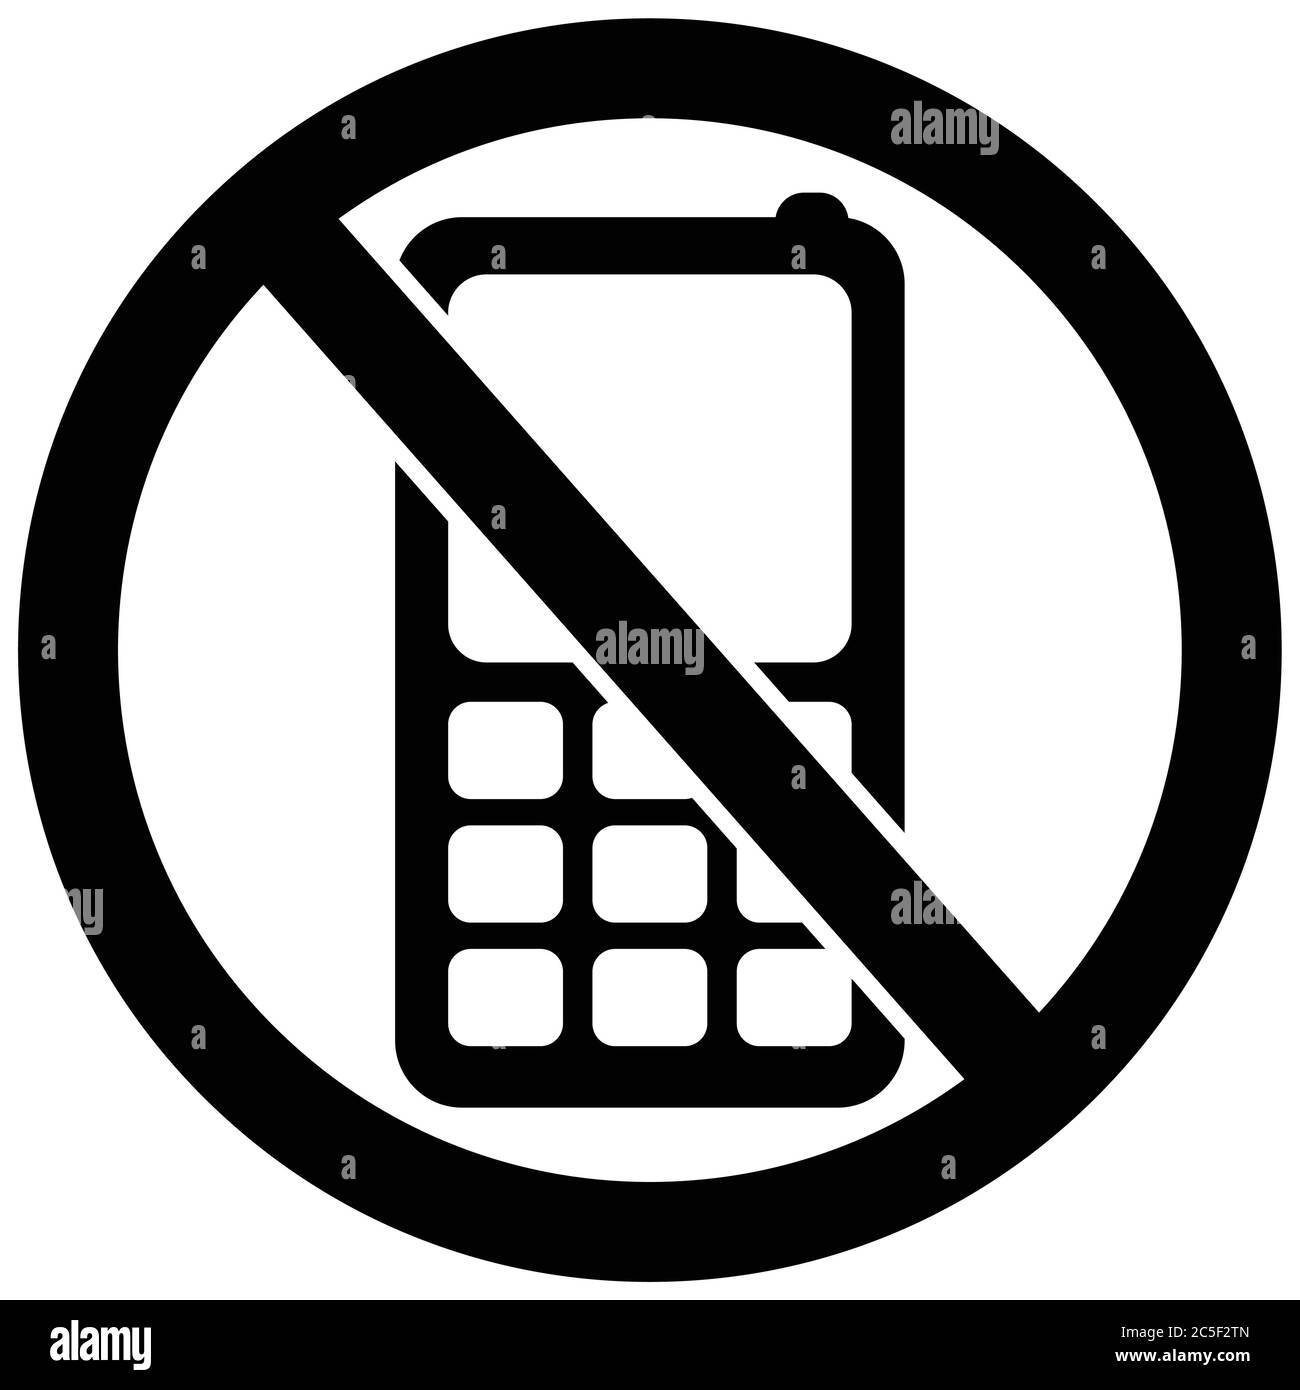 Forbidden Phone Use Sign No Smartphone Icon Vector illustration Stock Vector